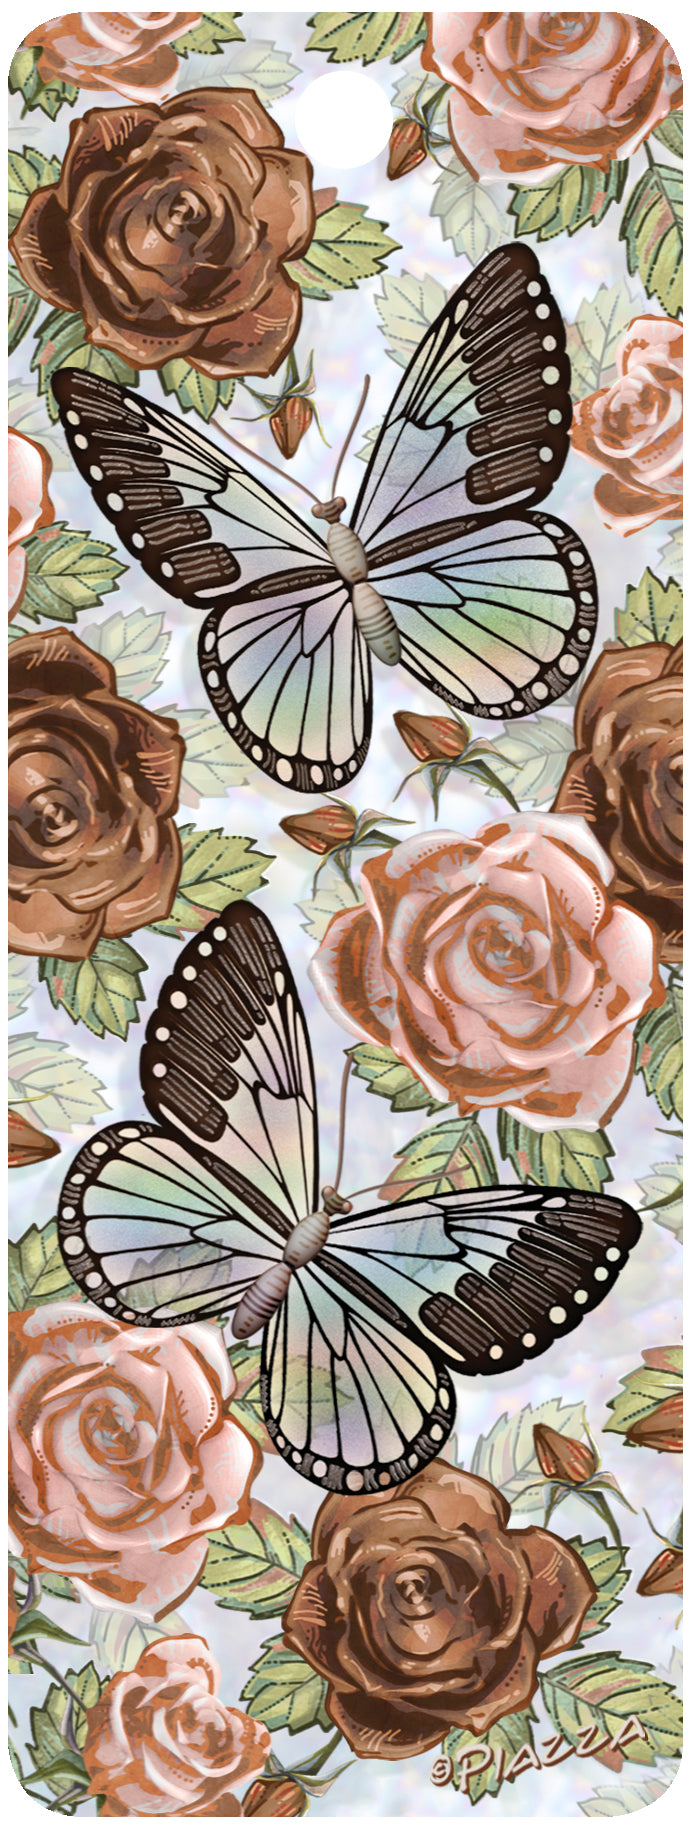 SKU : 16230 - Roses and Butterflies - 3D Bookmark